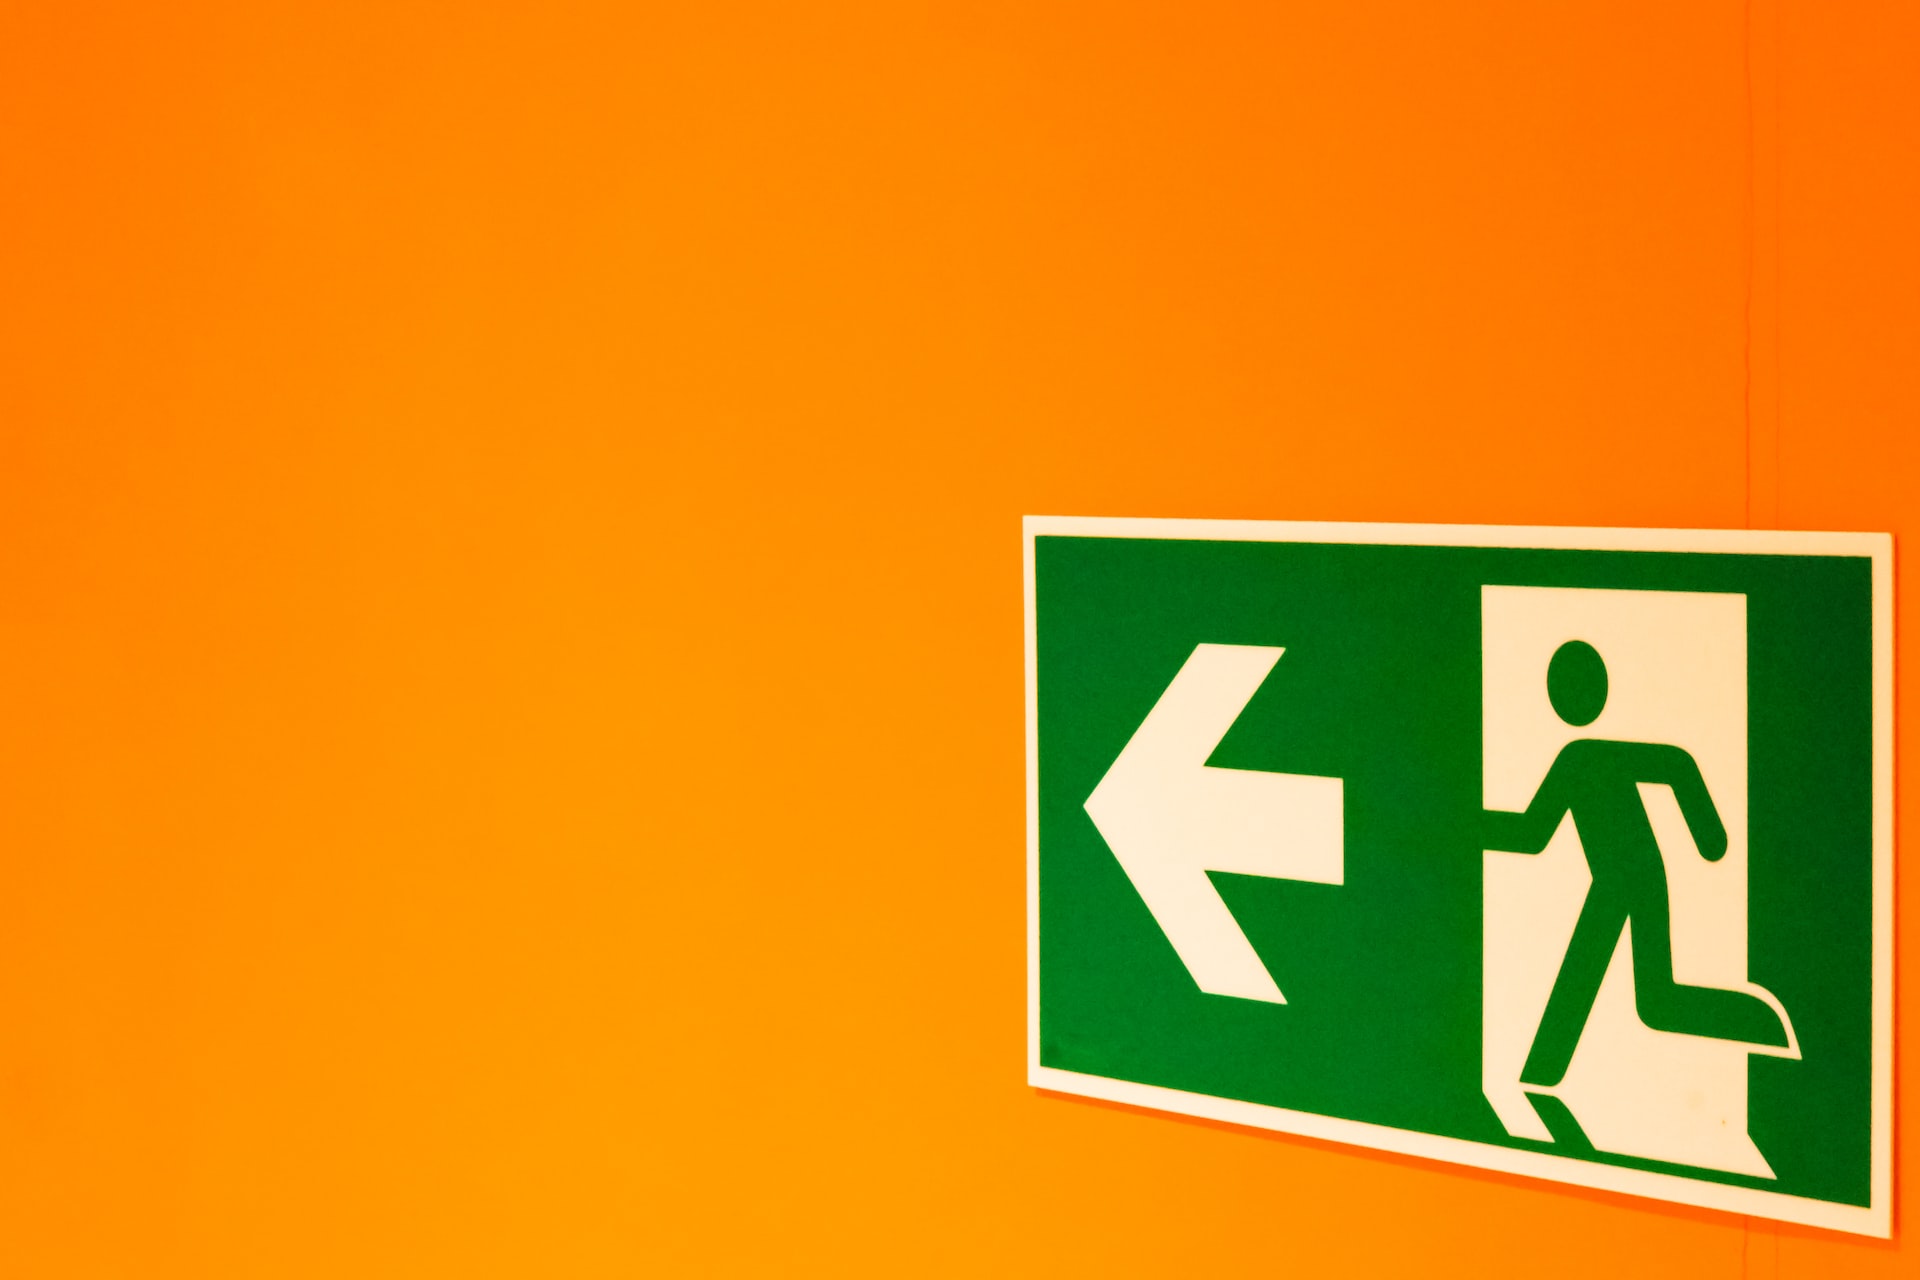 green exit sign on orange background